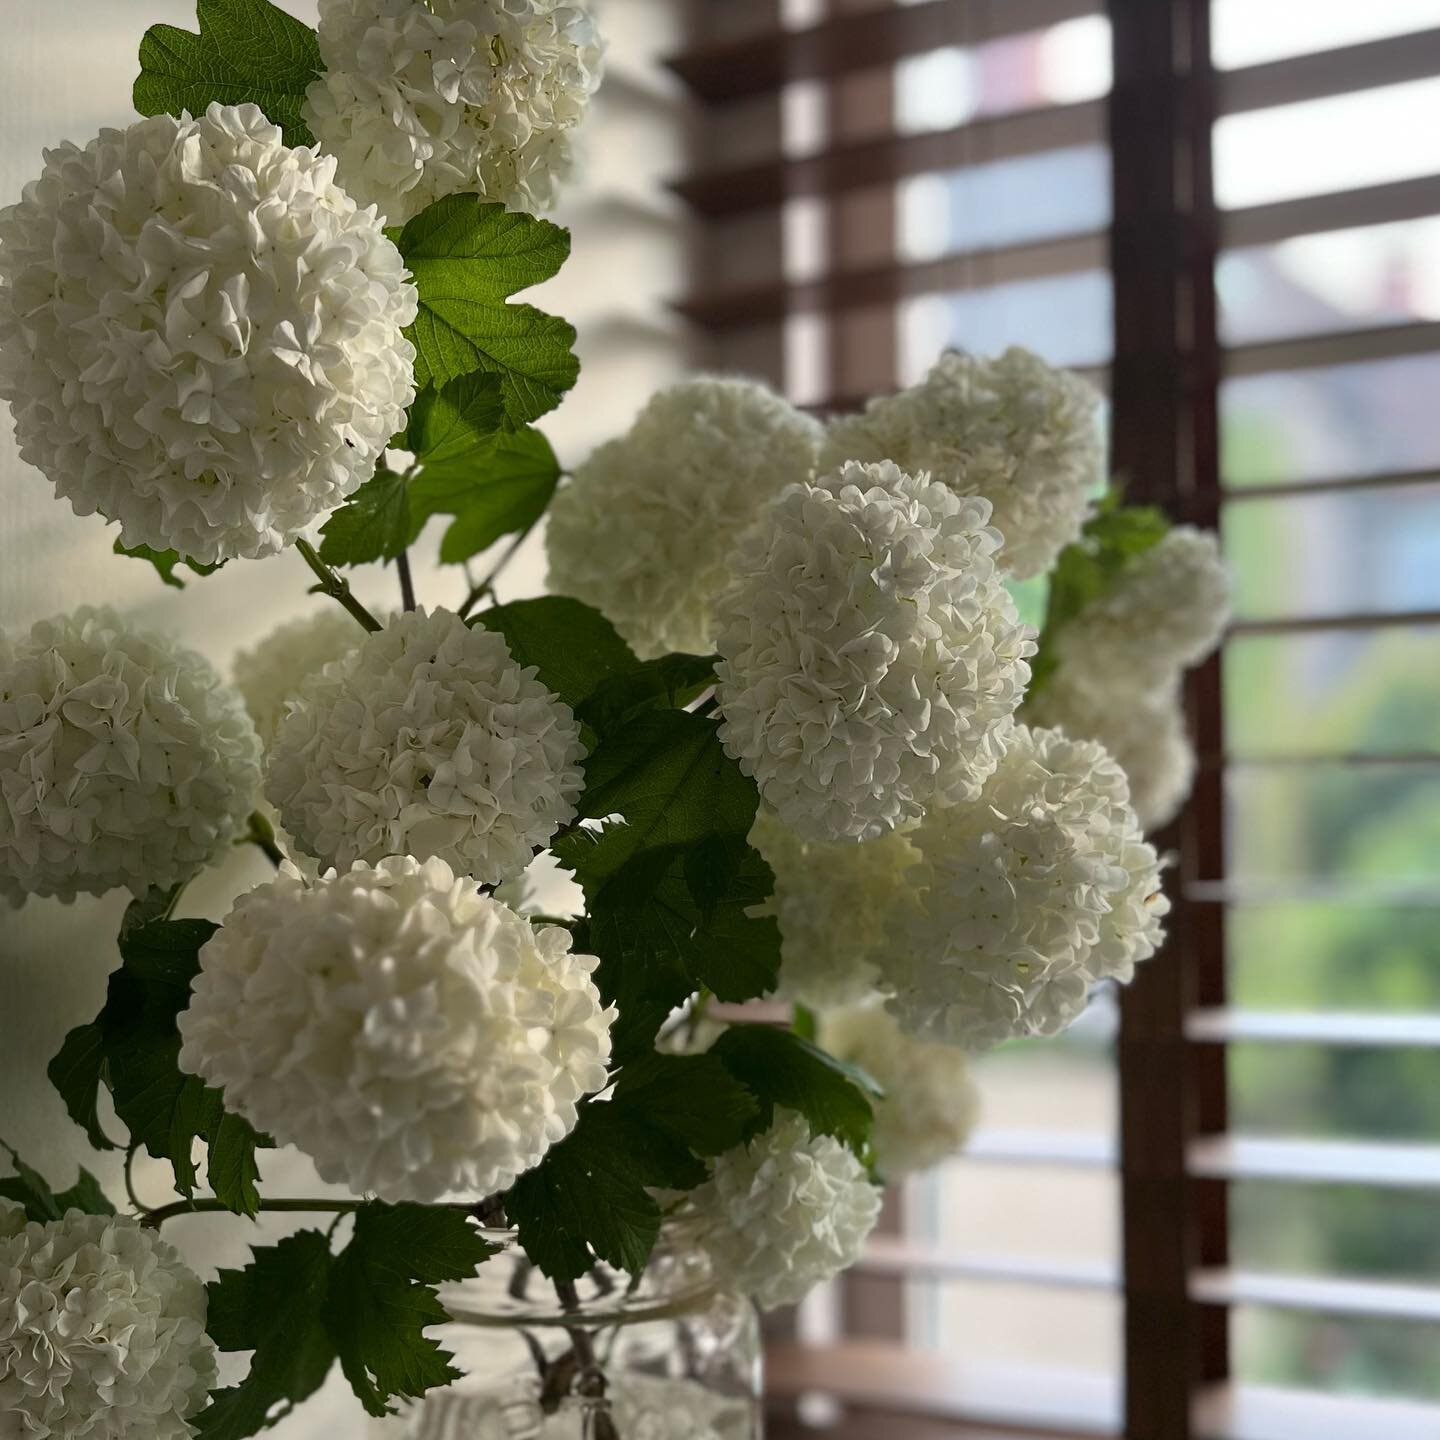 ❤️ Current fav

#guelderrose #vibernum #flowers #whiteandgreen #florist #britishflowers #homegrown